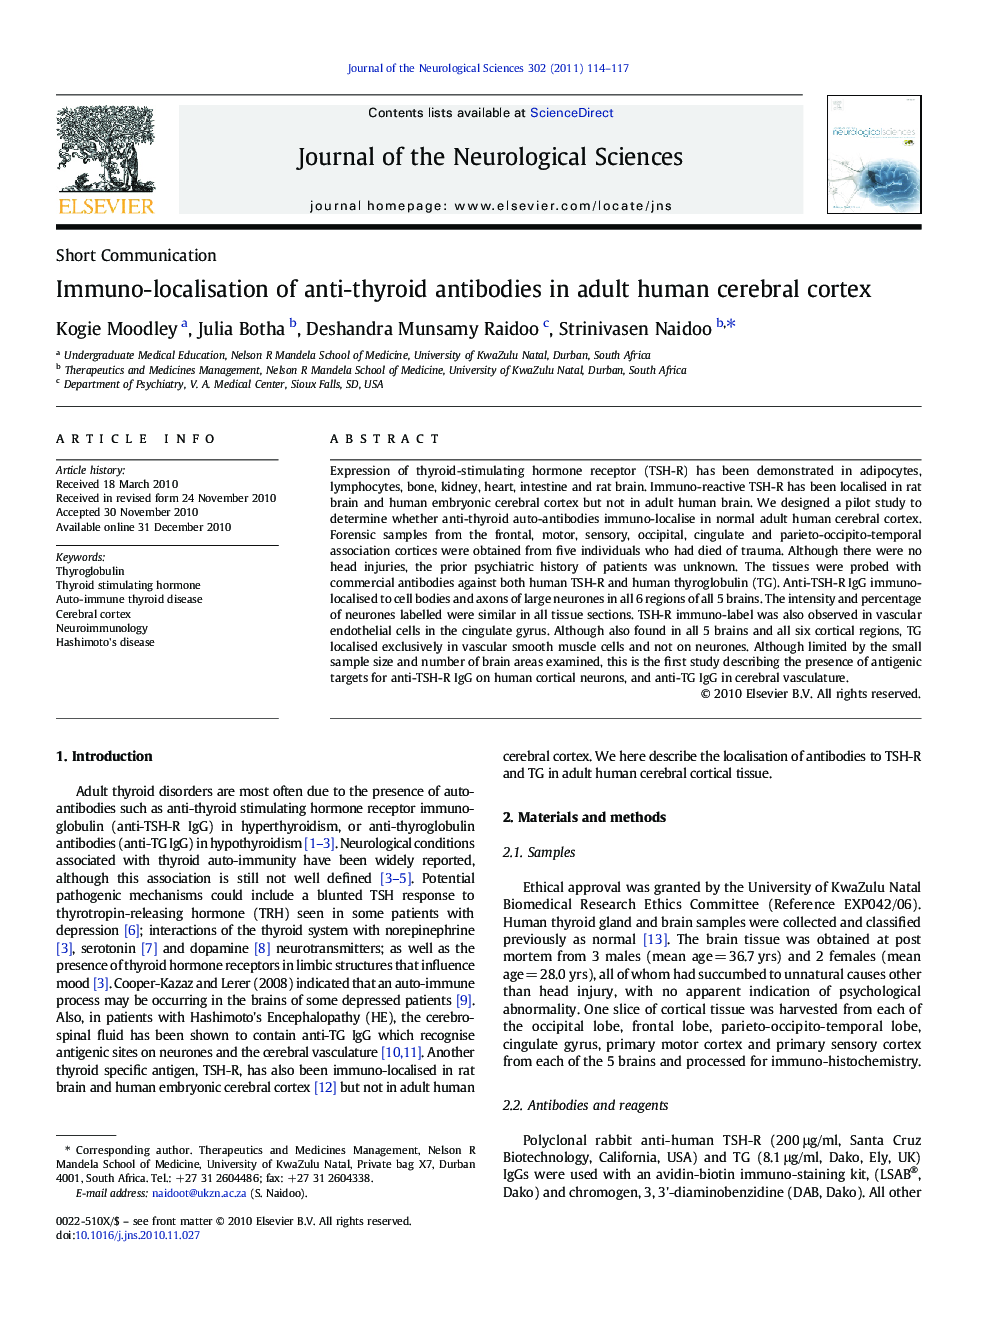 Immuno-localisation of anti-thyroid antibodies in adult human cerebral cortex